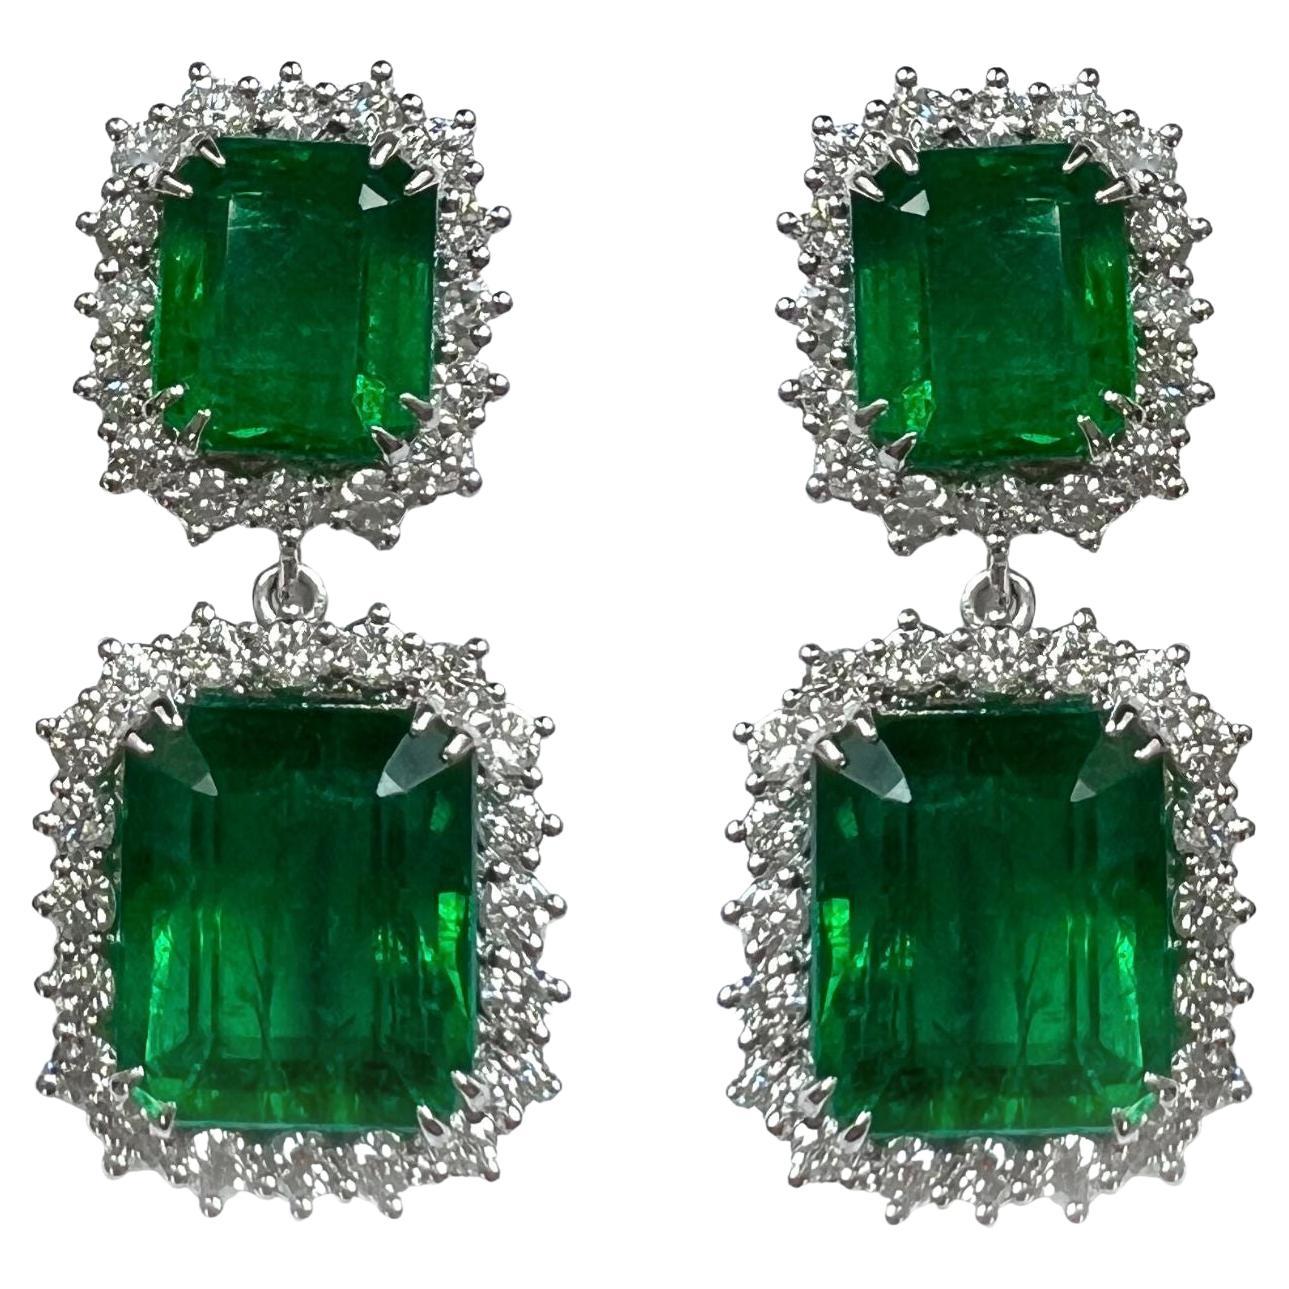 20 Carat Emerald Dangle Earrings With 2.5 Carat Halo Diamonds 18K White Gold